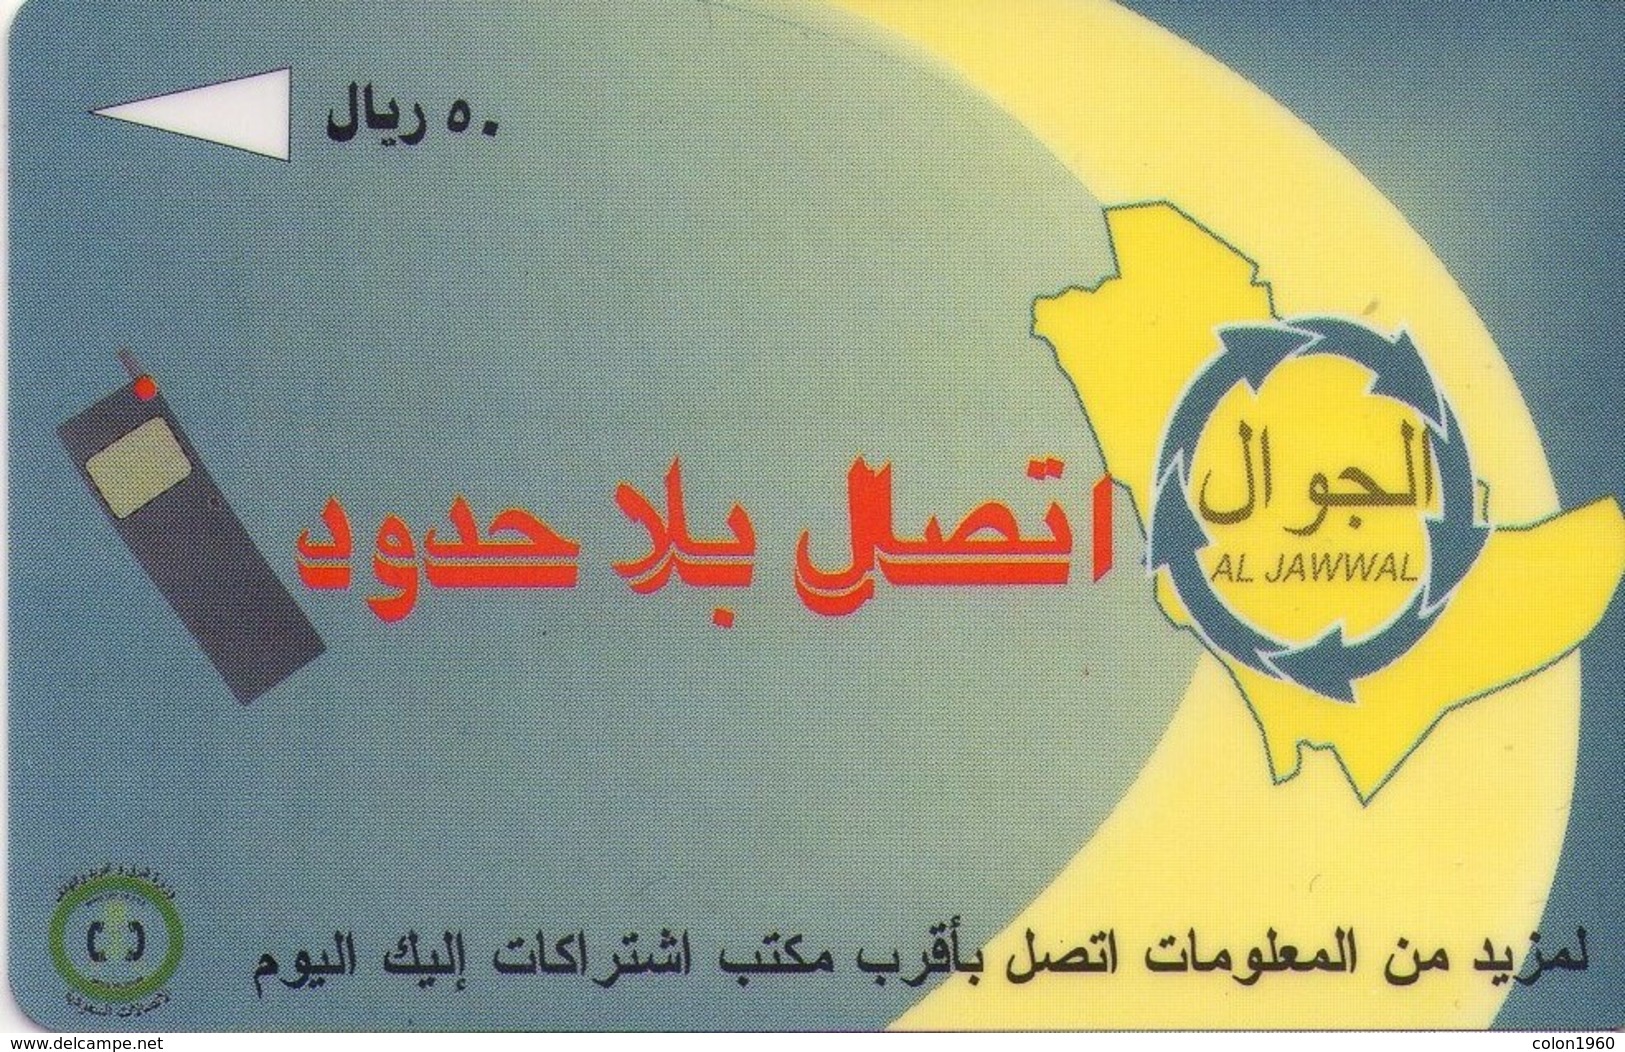 ARABIA SAUDITA. Al Jawwal Mobile Phones. 1996-01. SA-STC-0014 (SAUDF). (006) - Saudi Arabia